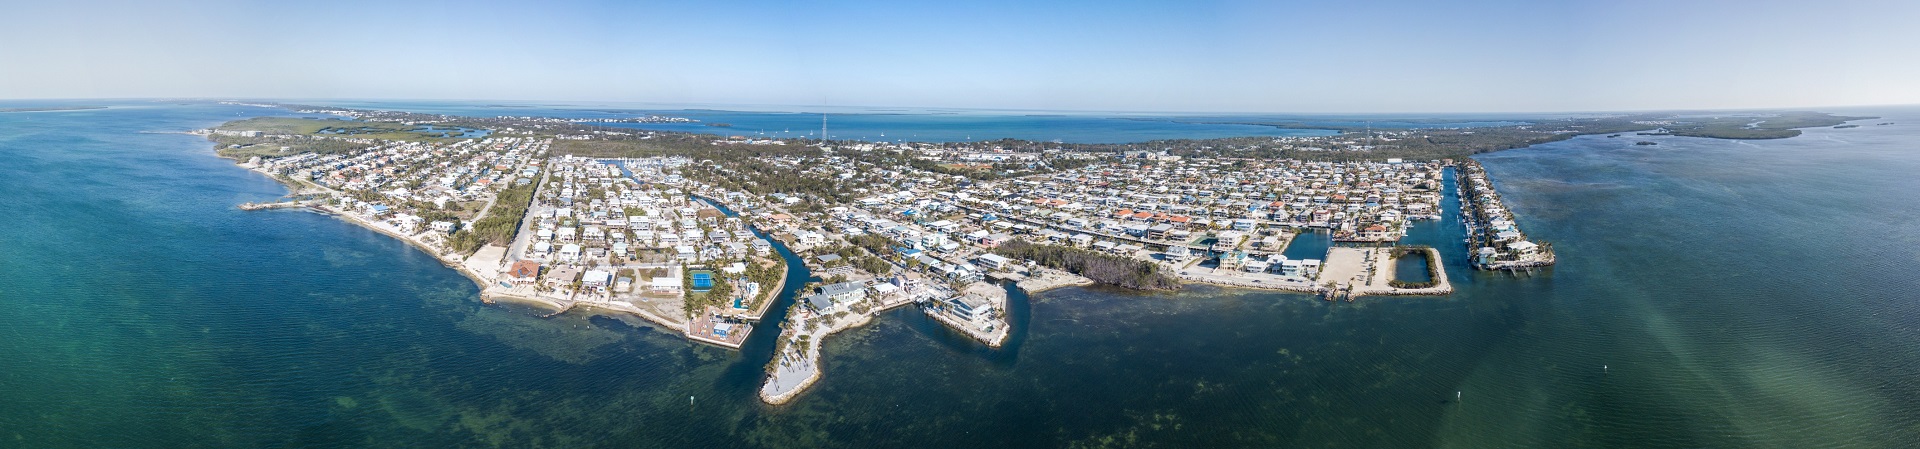 aerial shot of monroe county florida